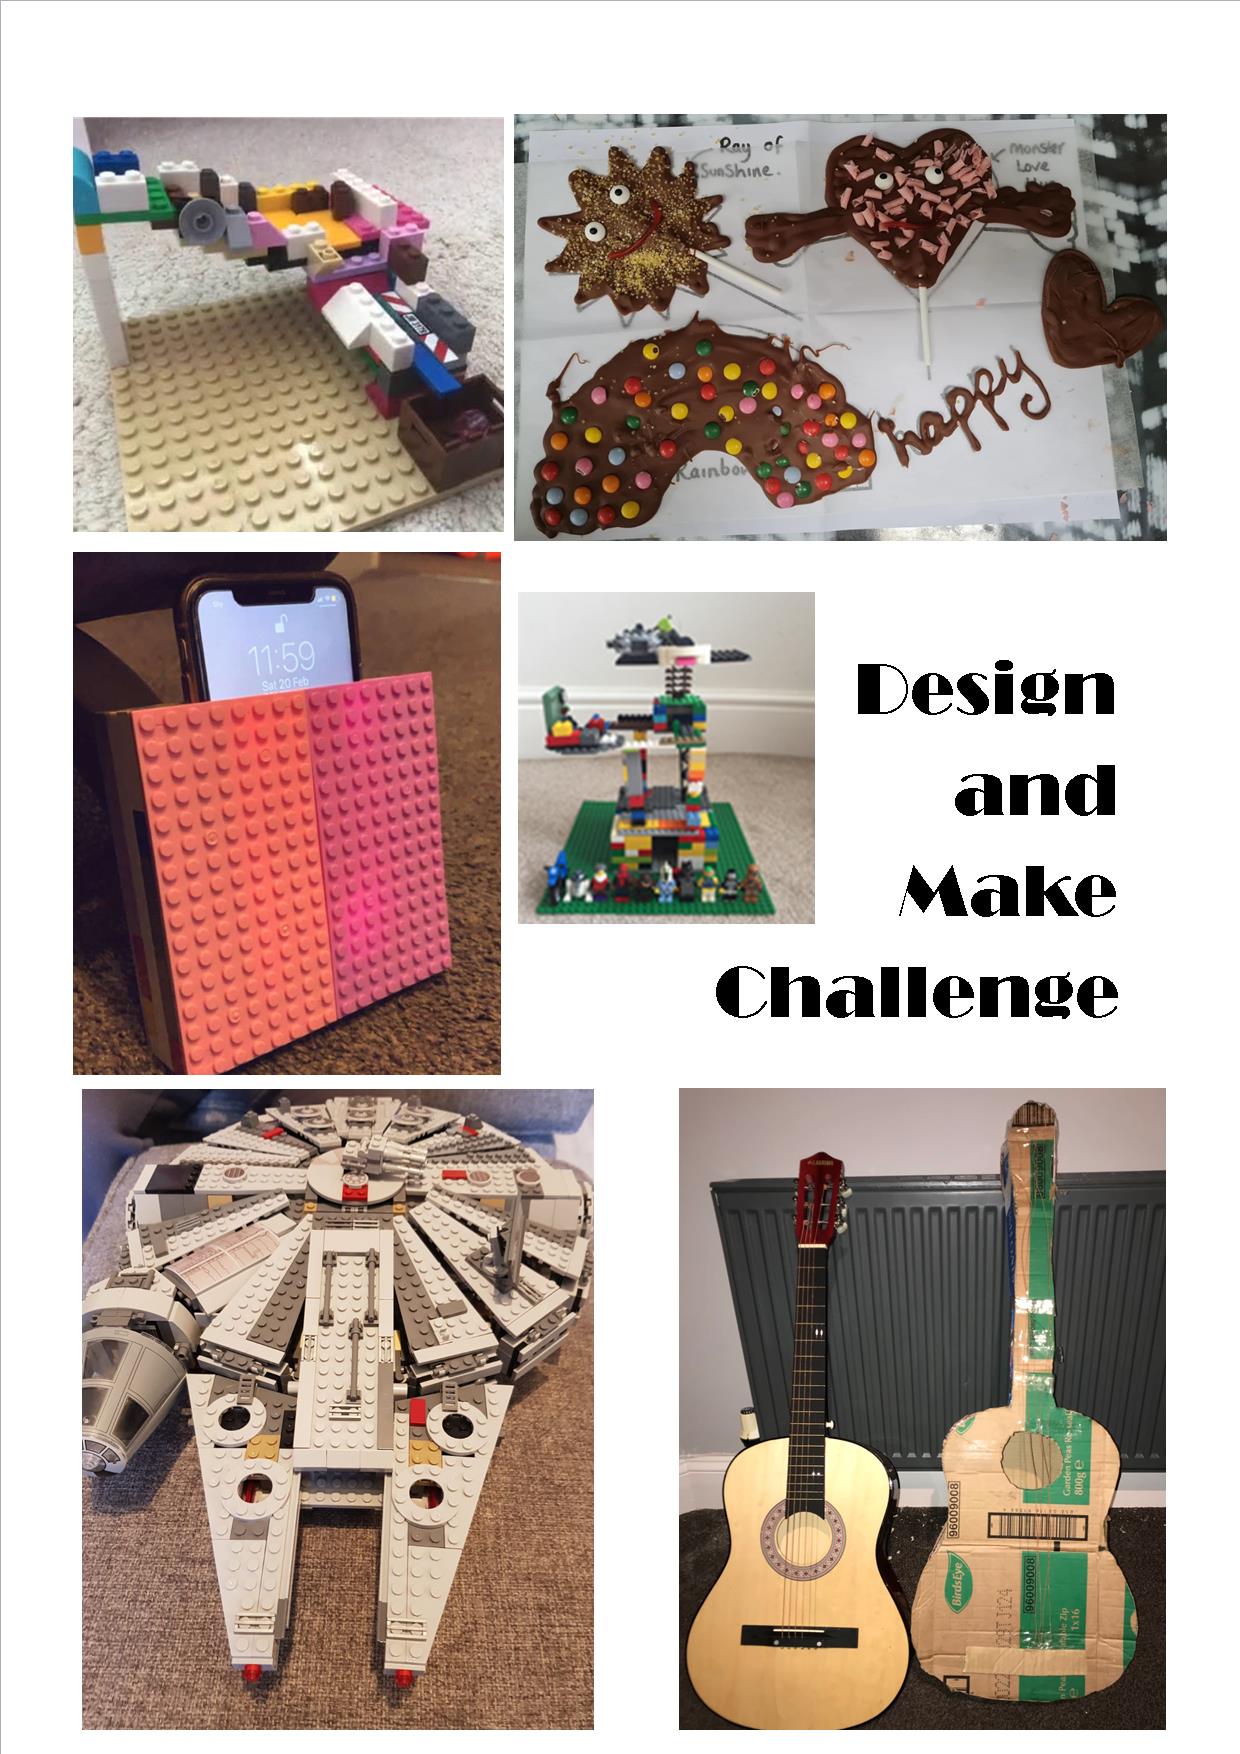 Design and Make Challenge